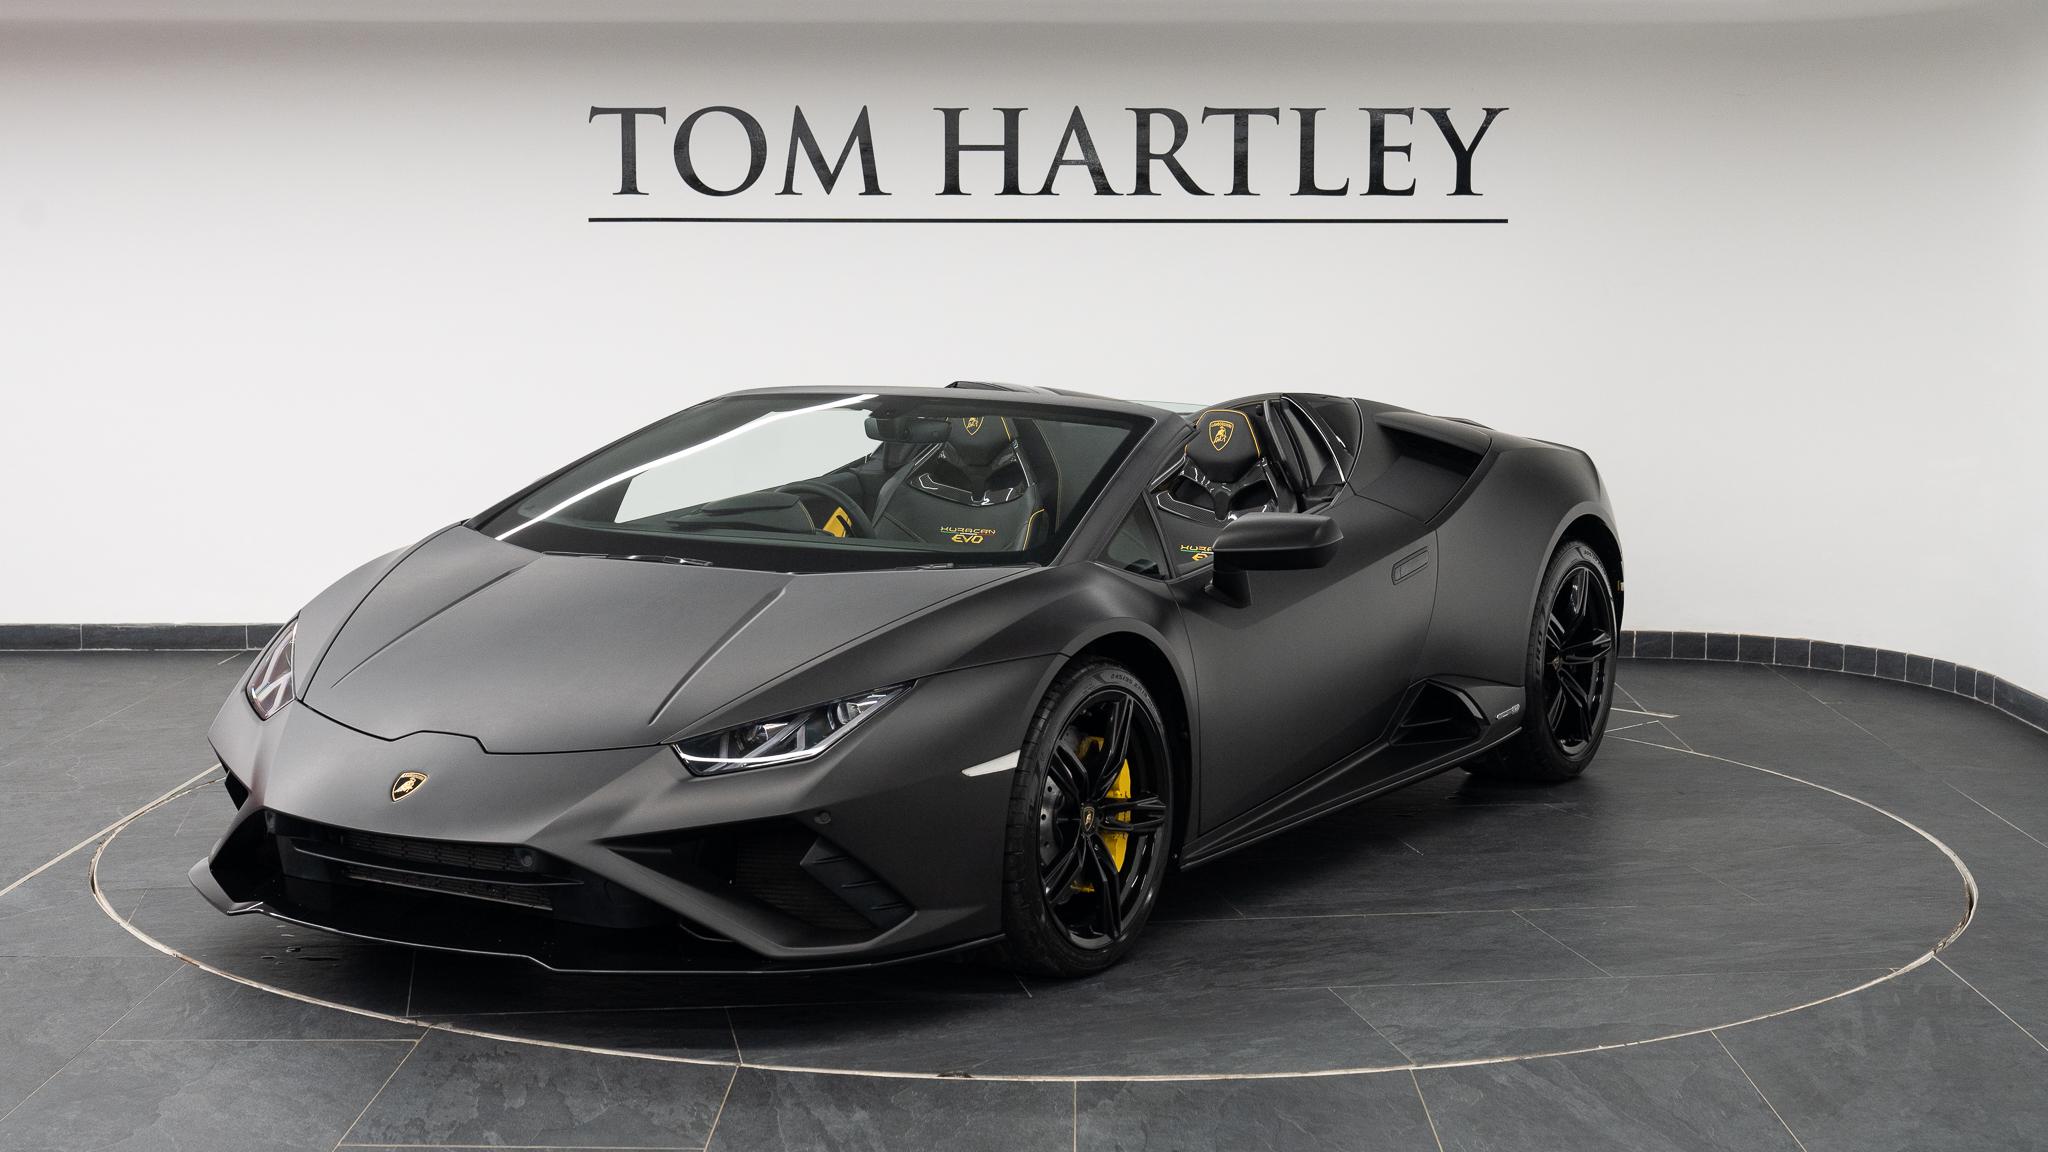 Onregelmatigheden donderdag Ontslag nemen Used 2021 Lamborghini HURACAN LP 610-2 EVO SPYDER £POA 2,000 miles Matt  Black Vinyl Wrap | Tom Hartley